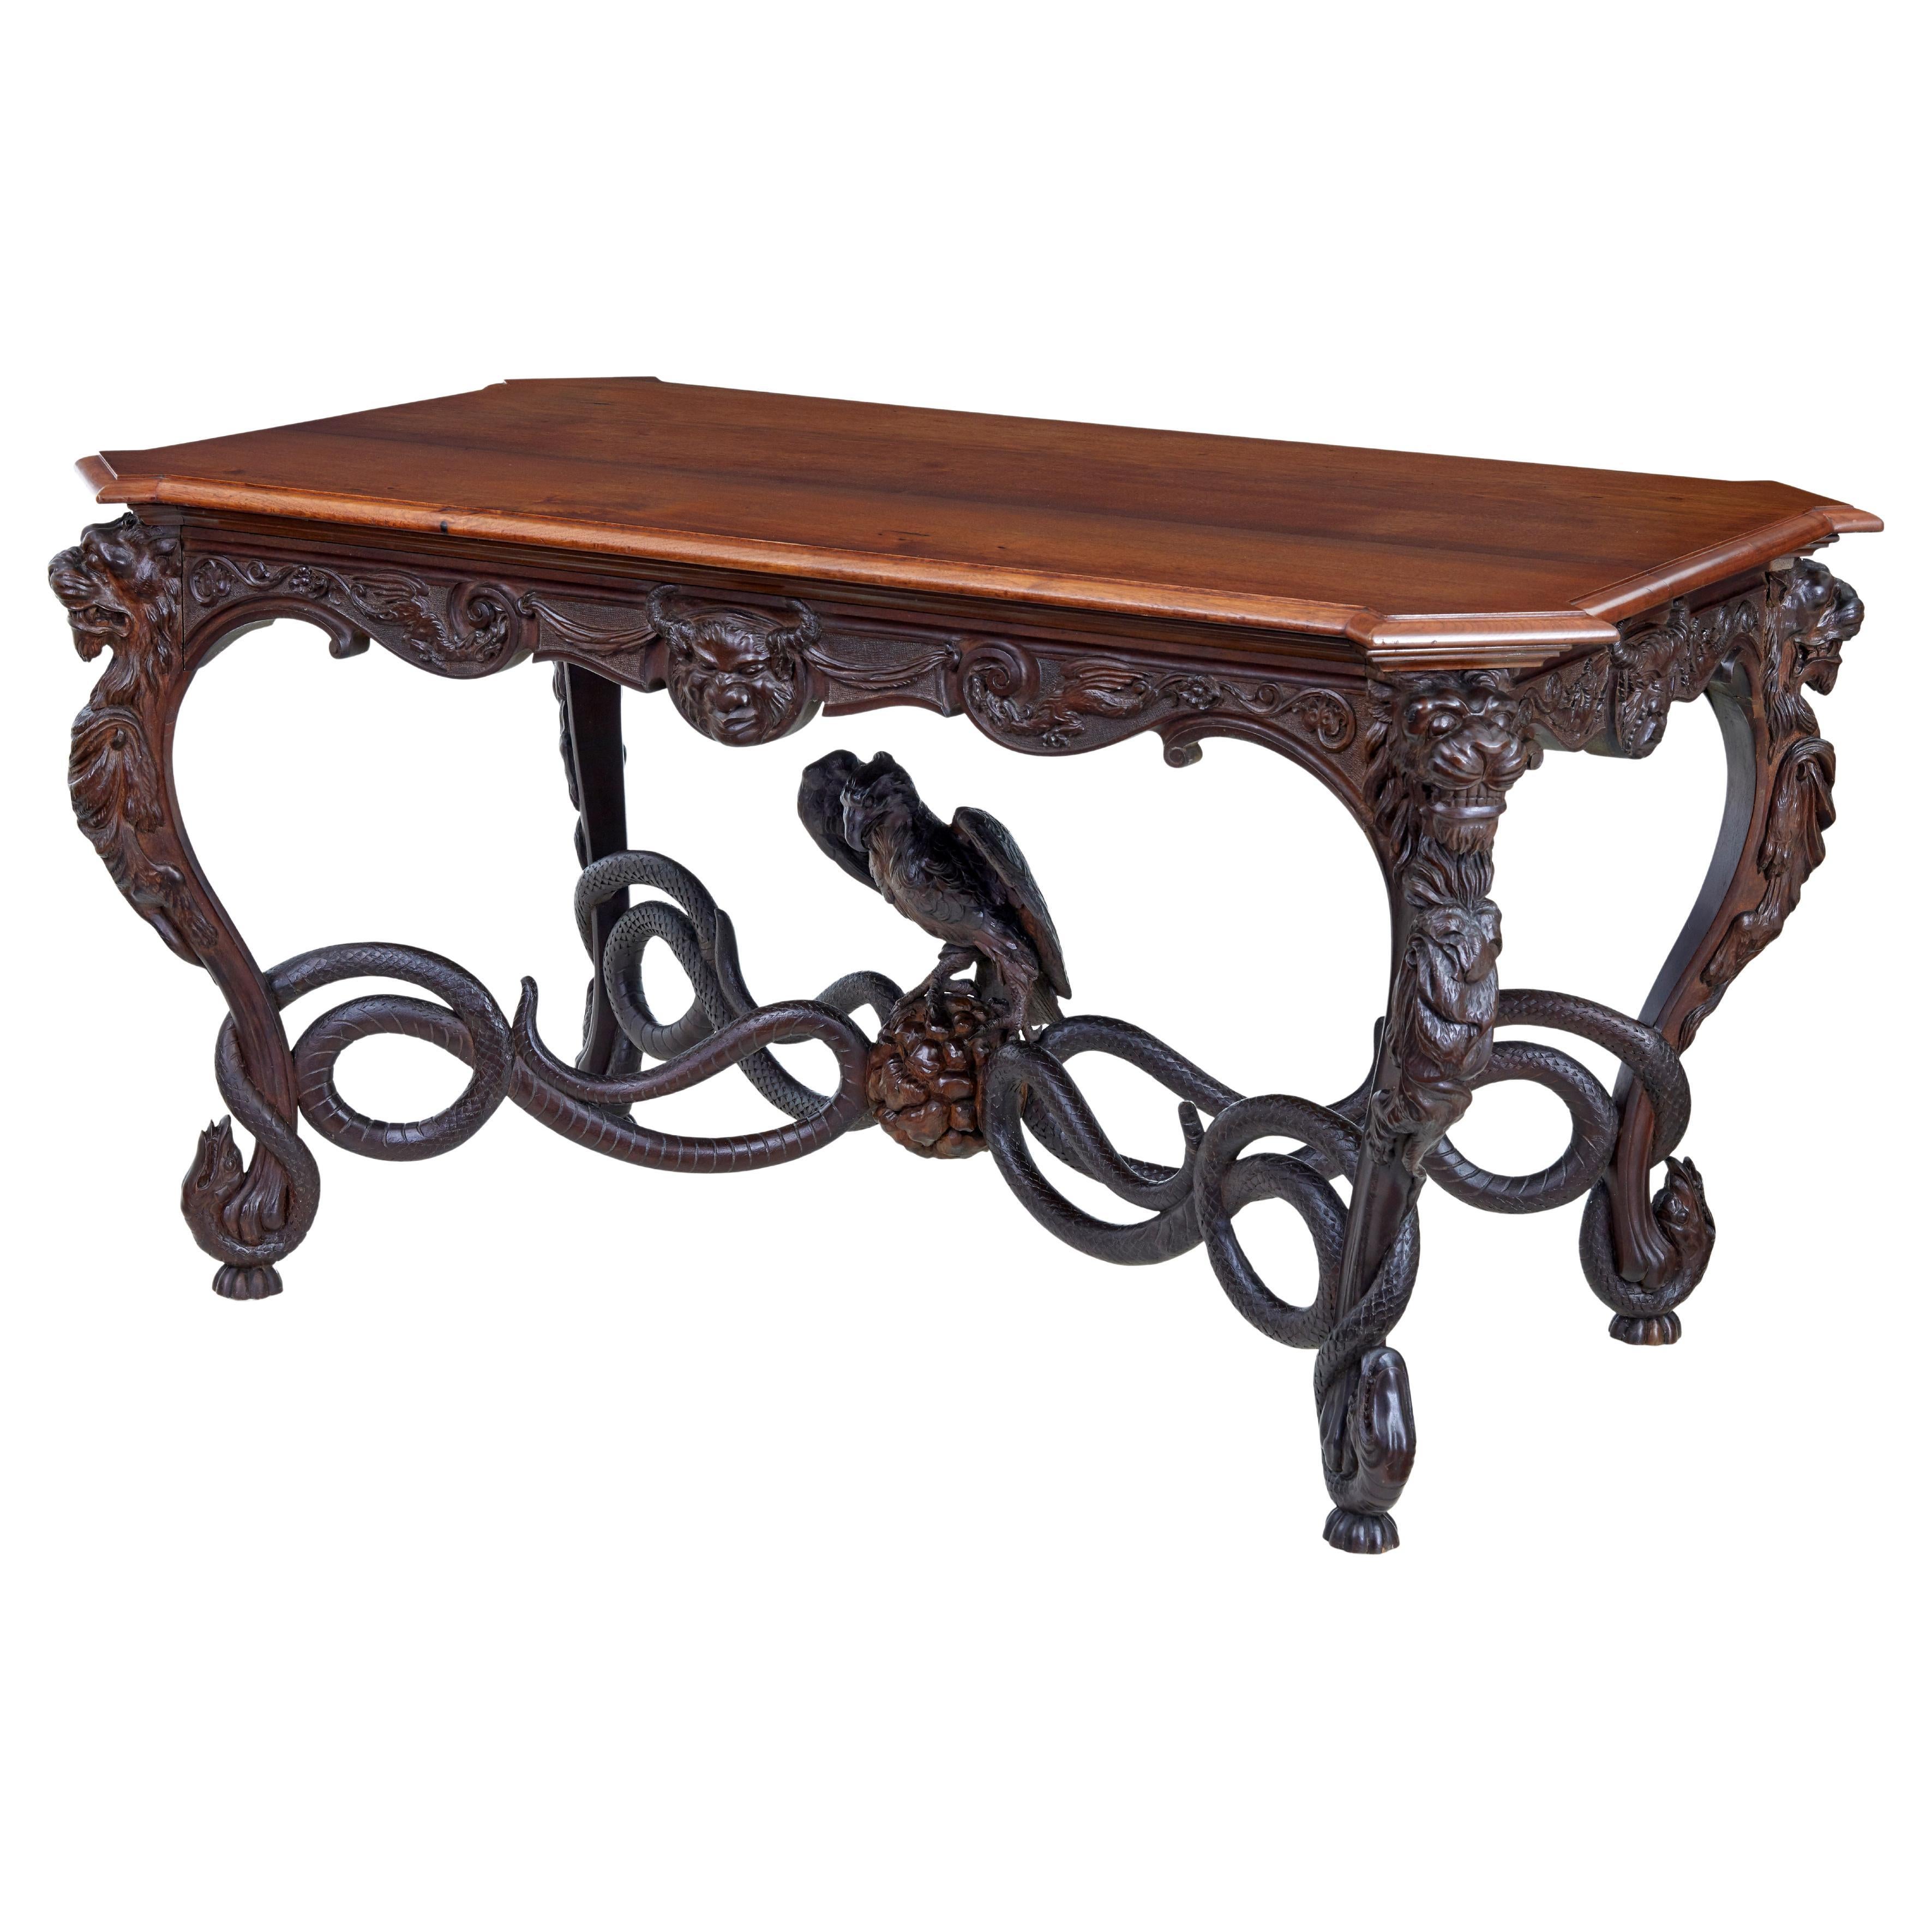 Rare 19th century continental carved mahogany center table